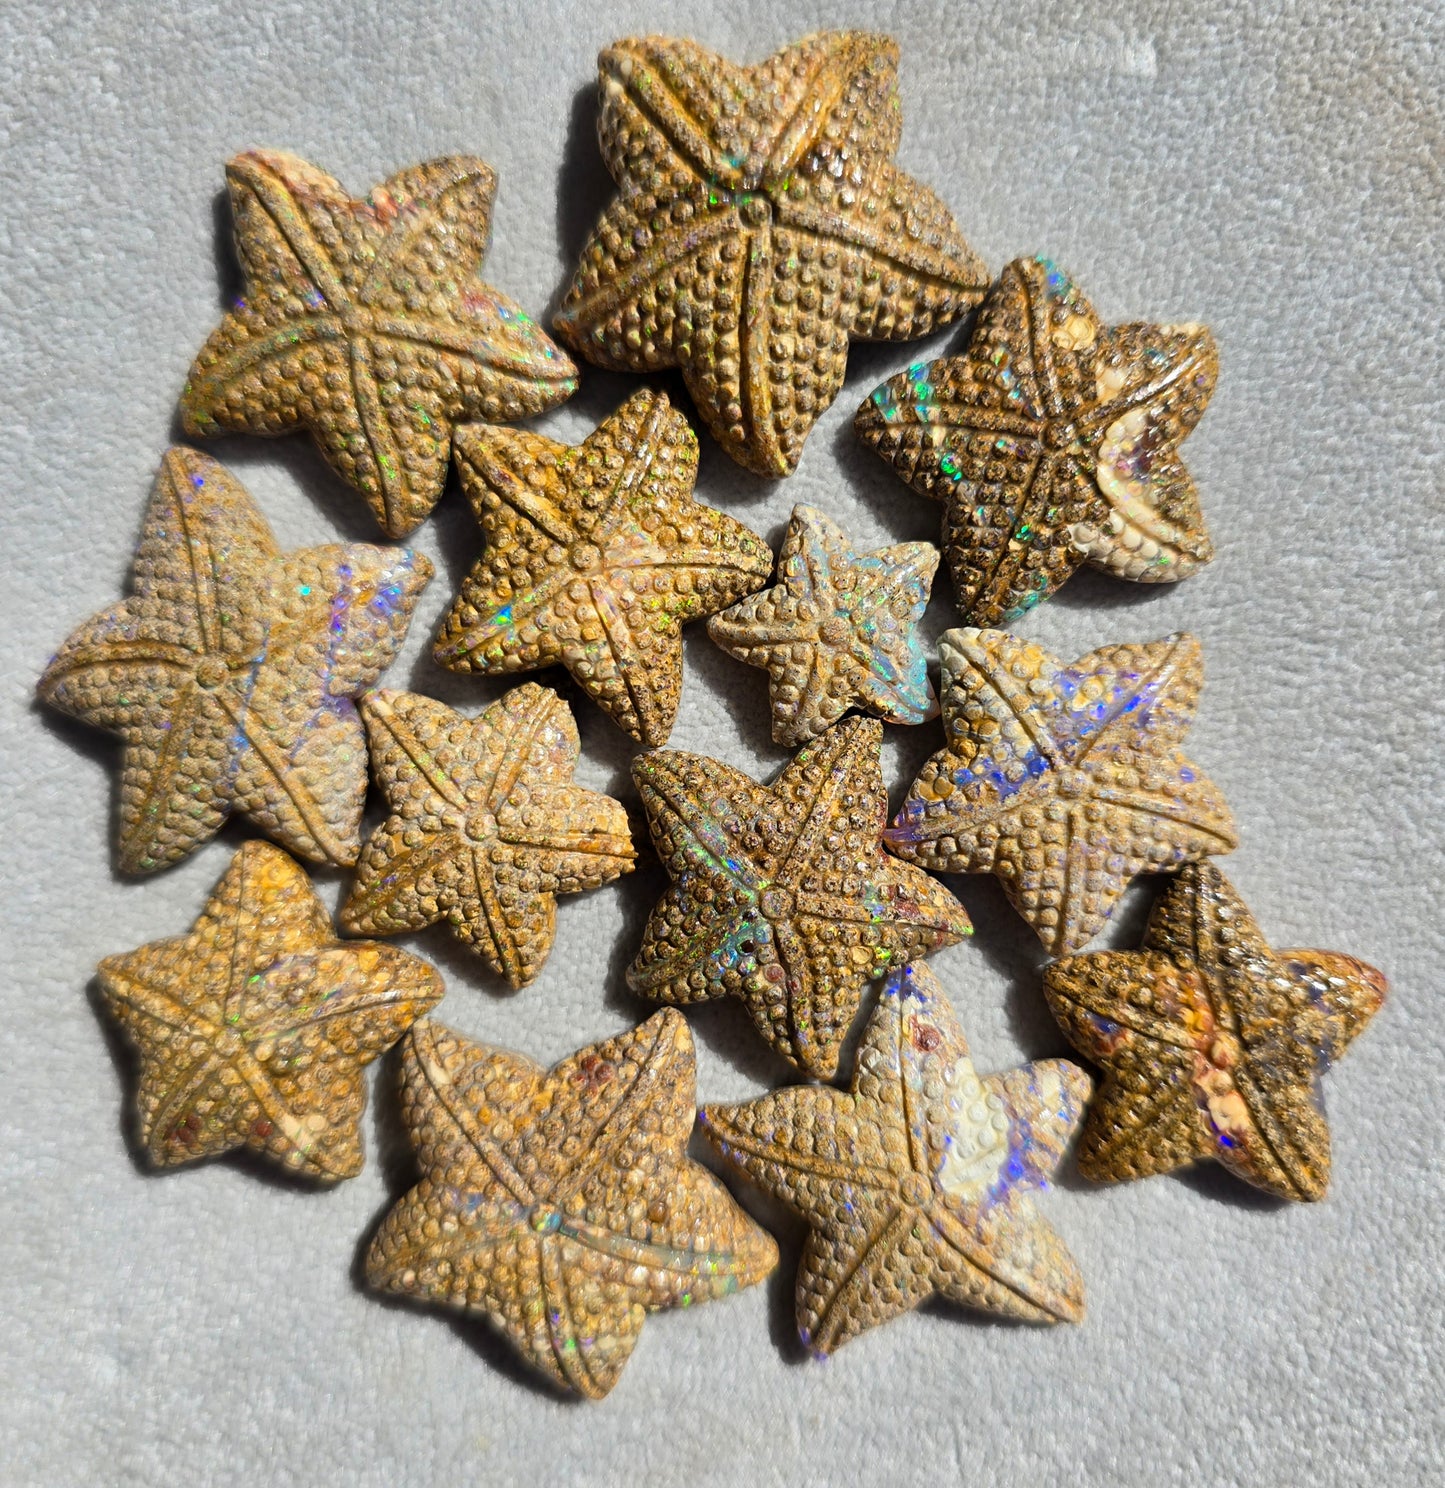 Exquisite 26.18 Ct Australian Boulder Opal Matrix Starfish Carving